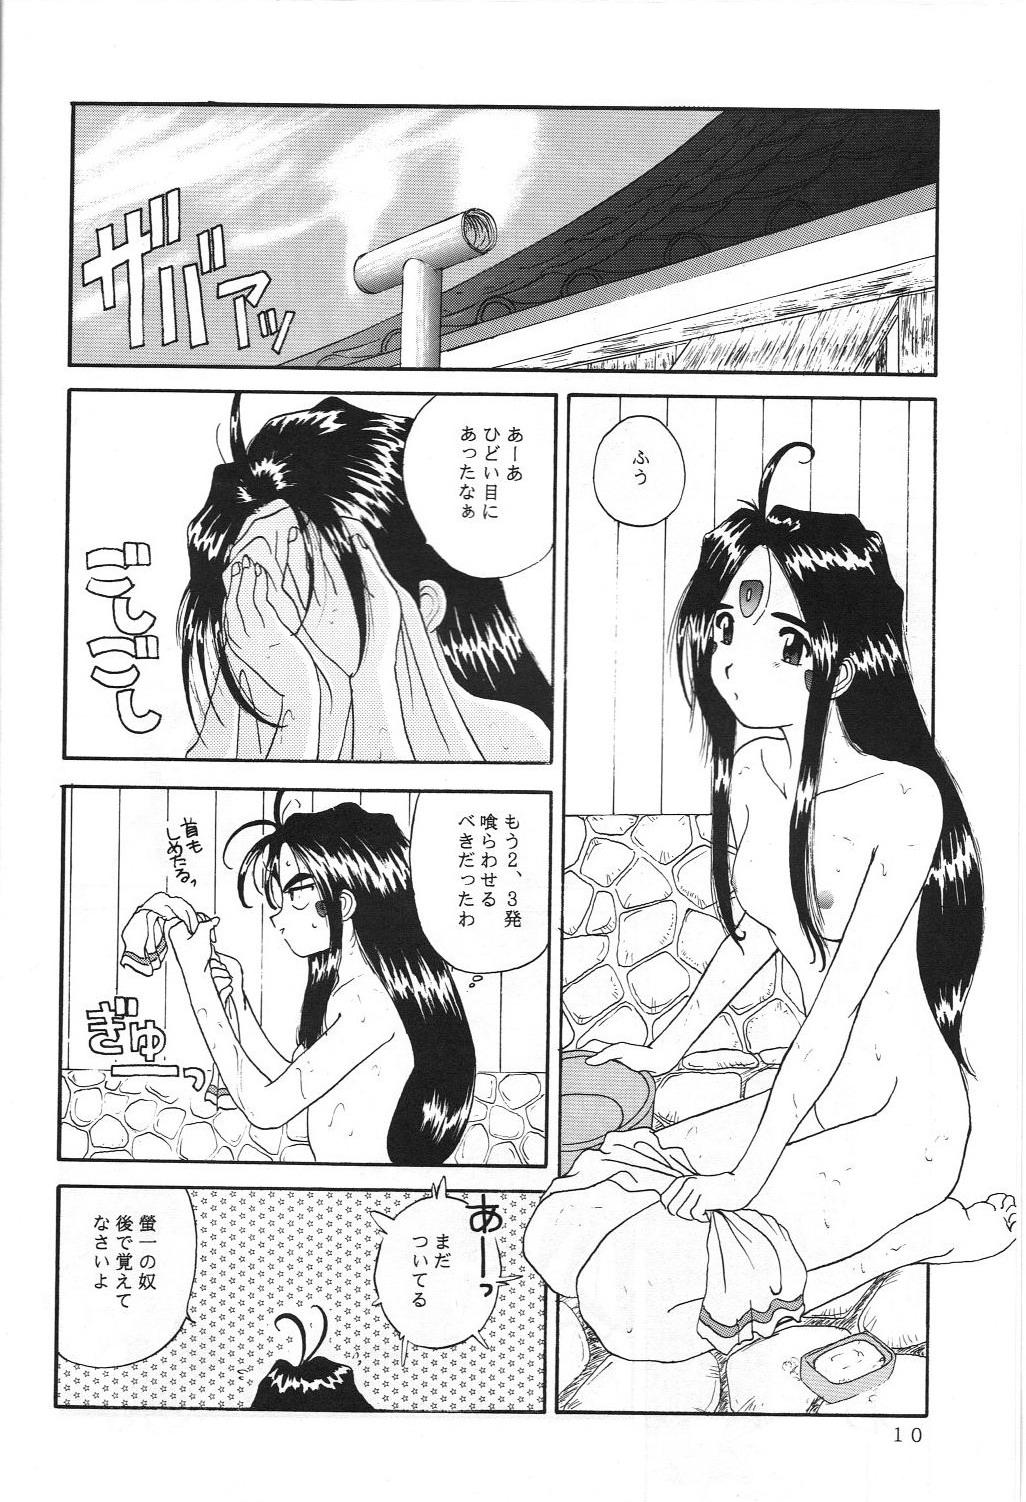 Home THE SECRET OF Chimatsuriya Vol. 5 - Ah my goddess Chupando - Page 9